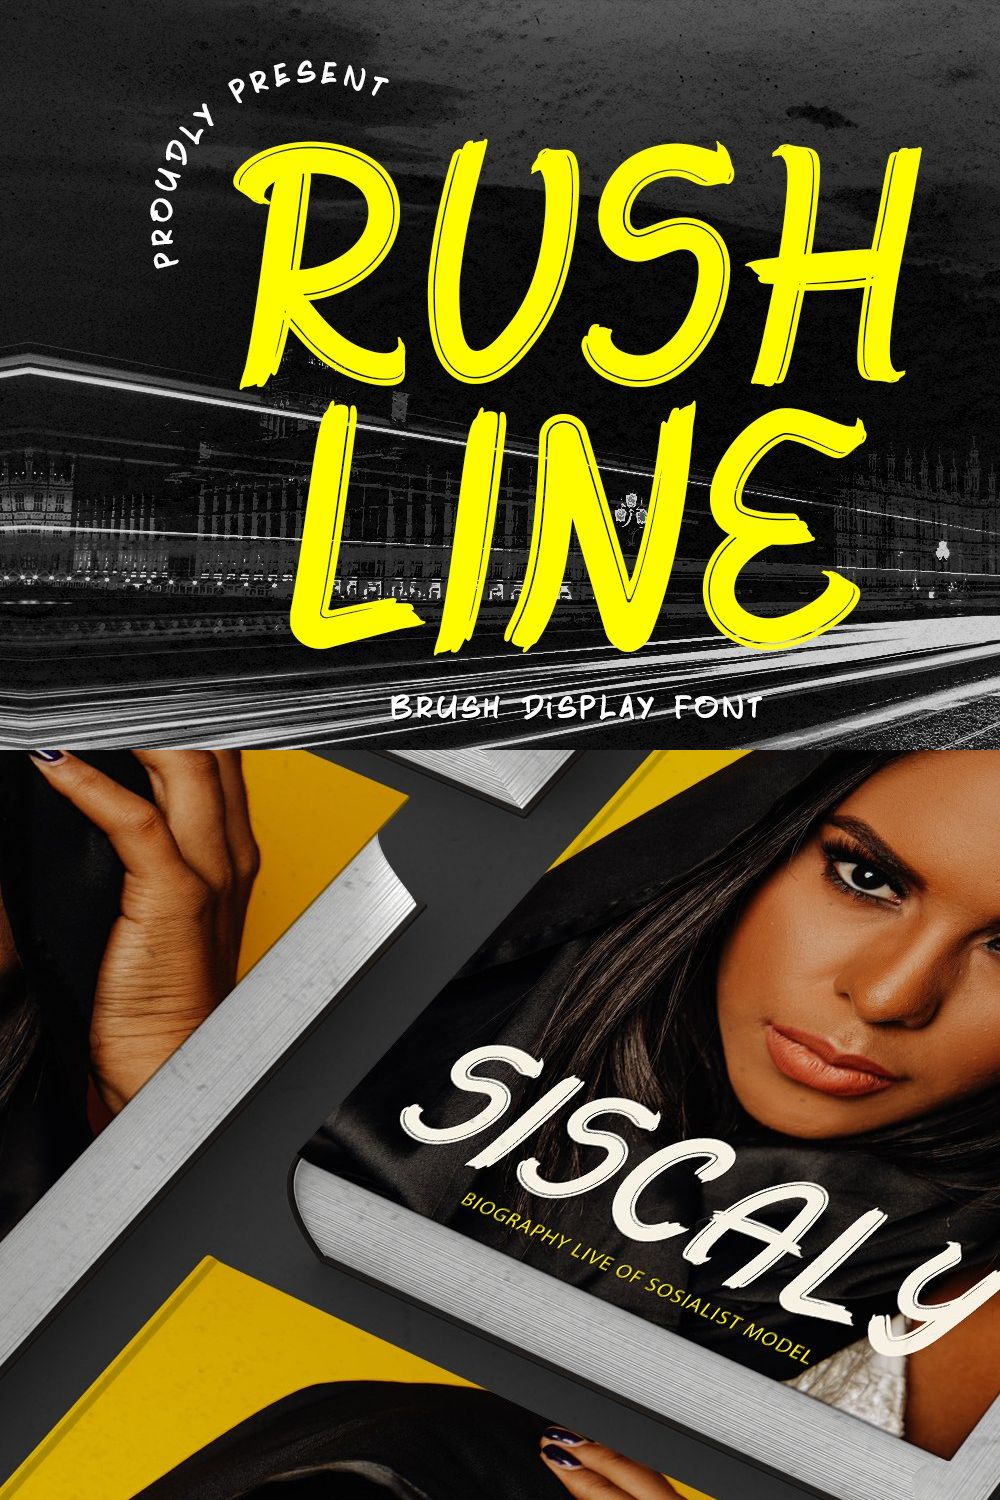 Rushline - Brush Display Font pinterest preview image.